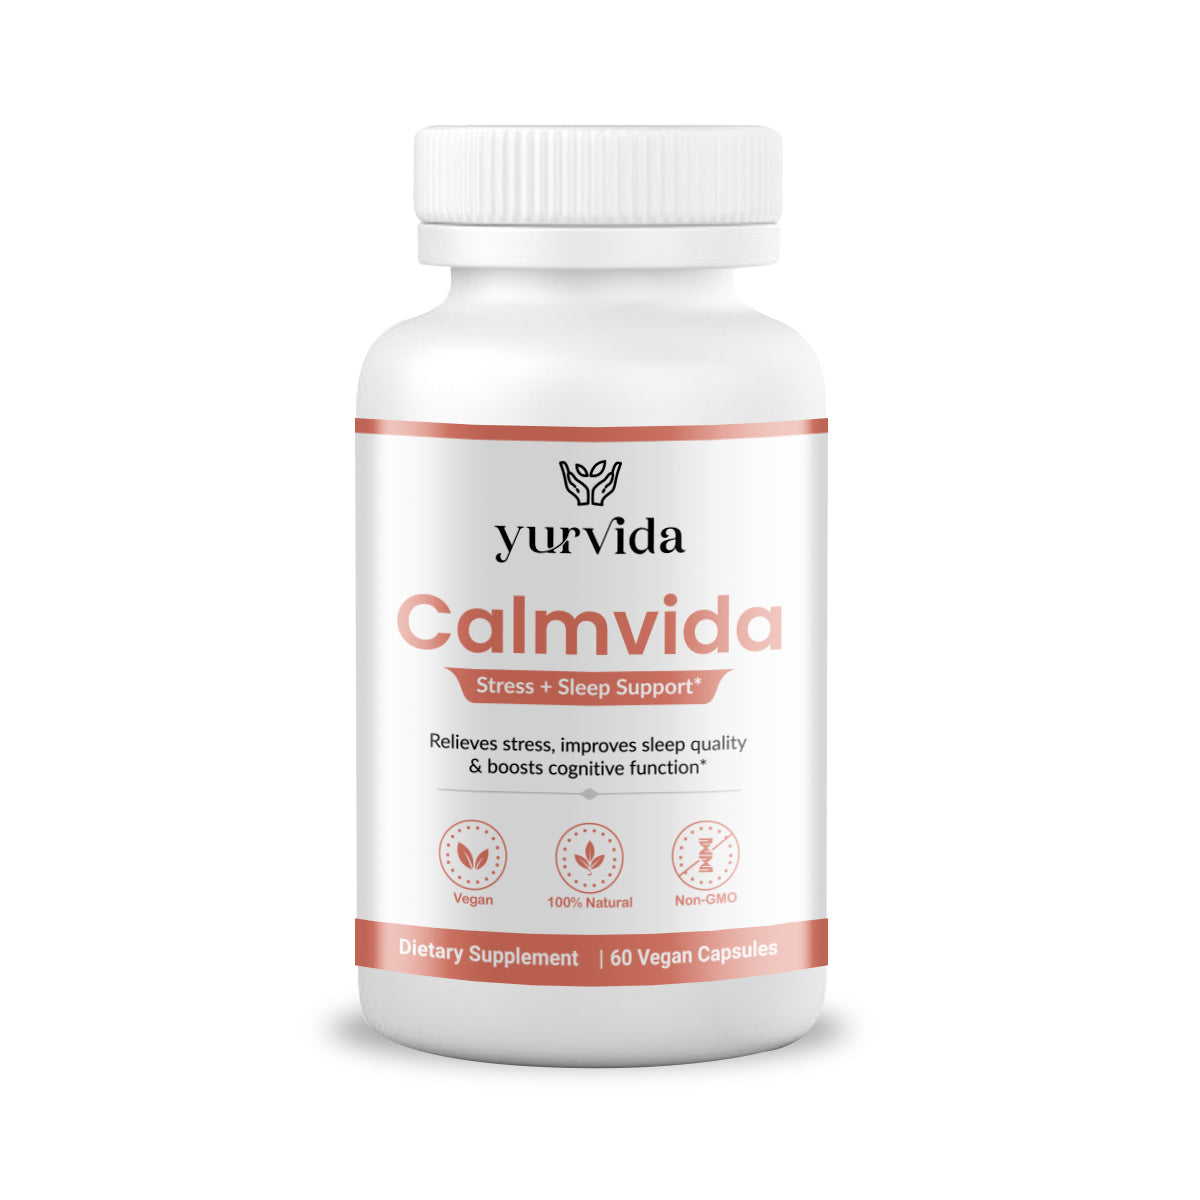 Calmvida - Proprietary Blend to Relieve Stress & Improve Sleep Quality*